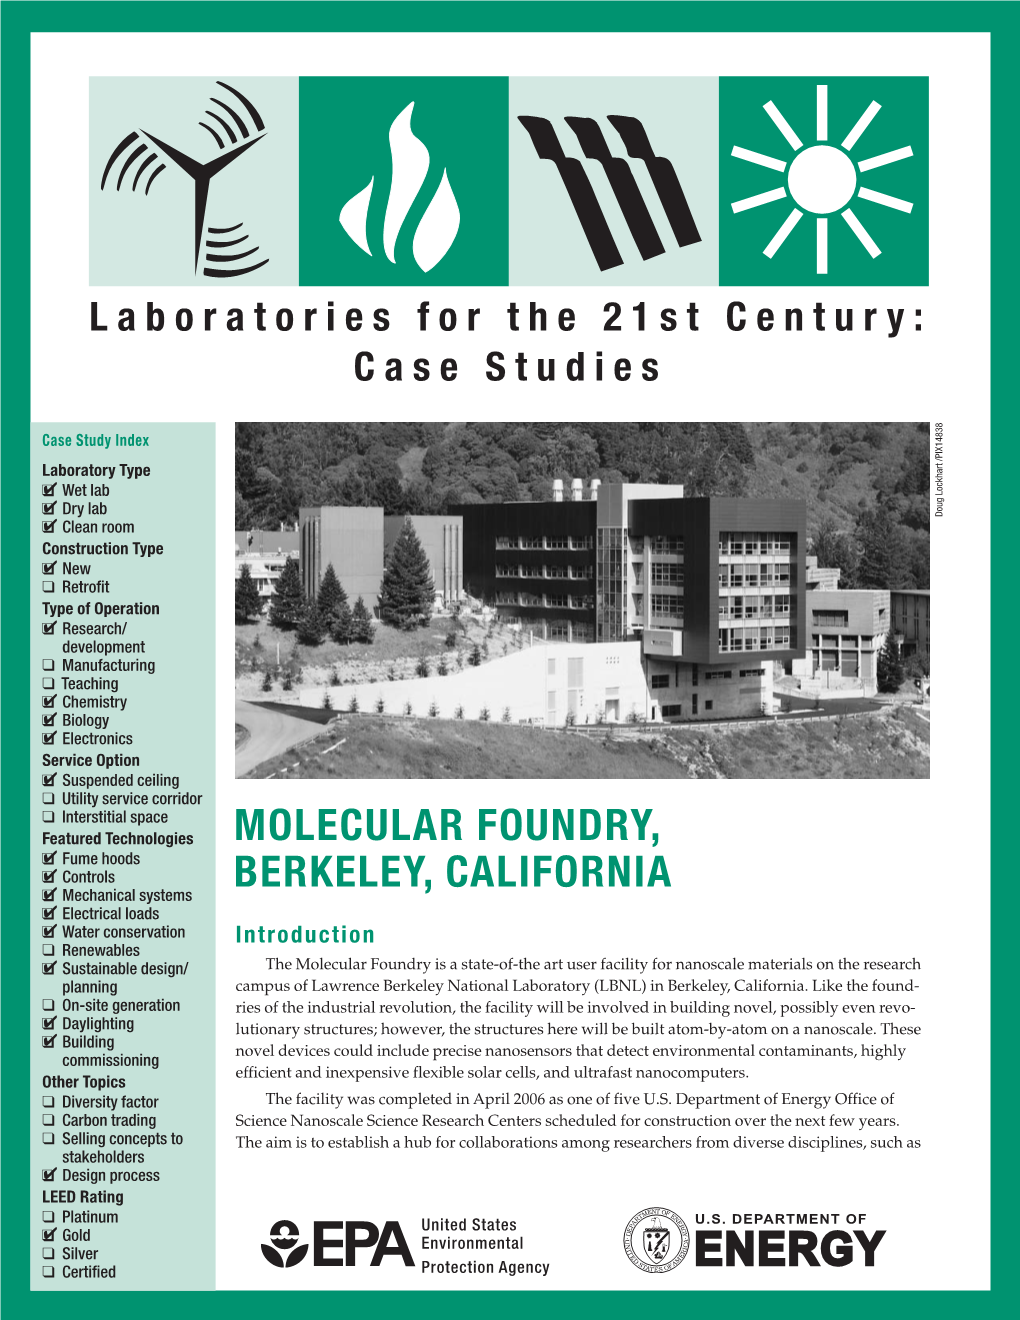 Molecular Foundry, Lawrence Berkeley National Laboratory